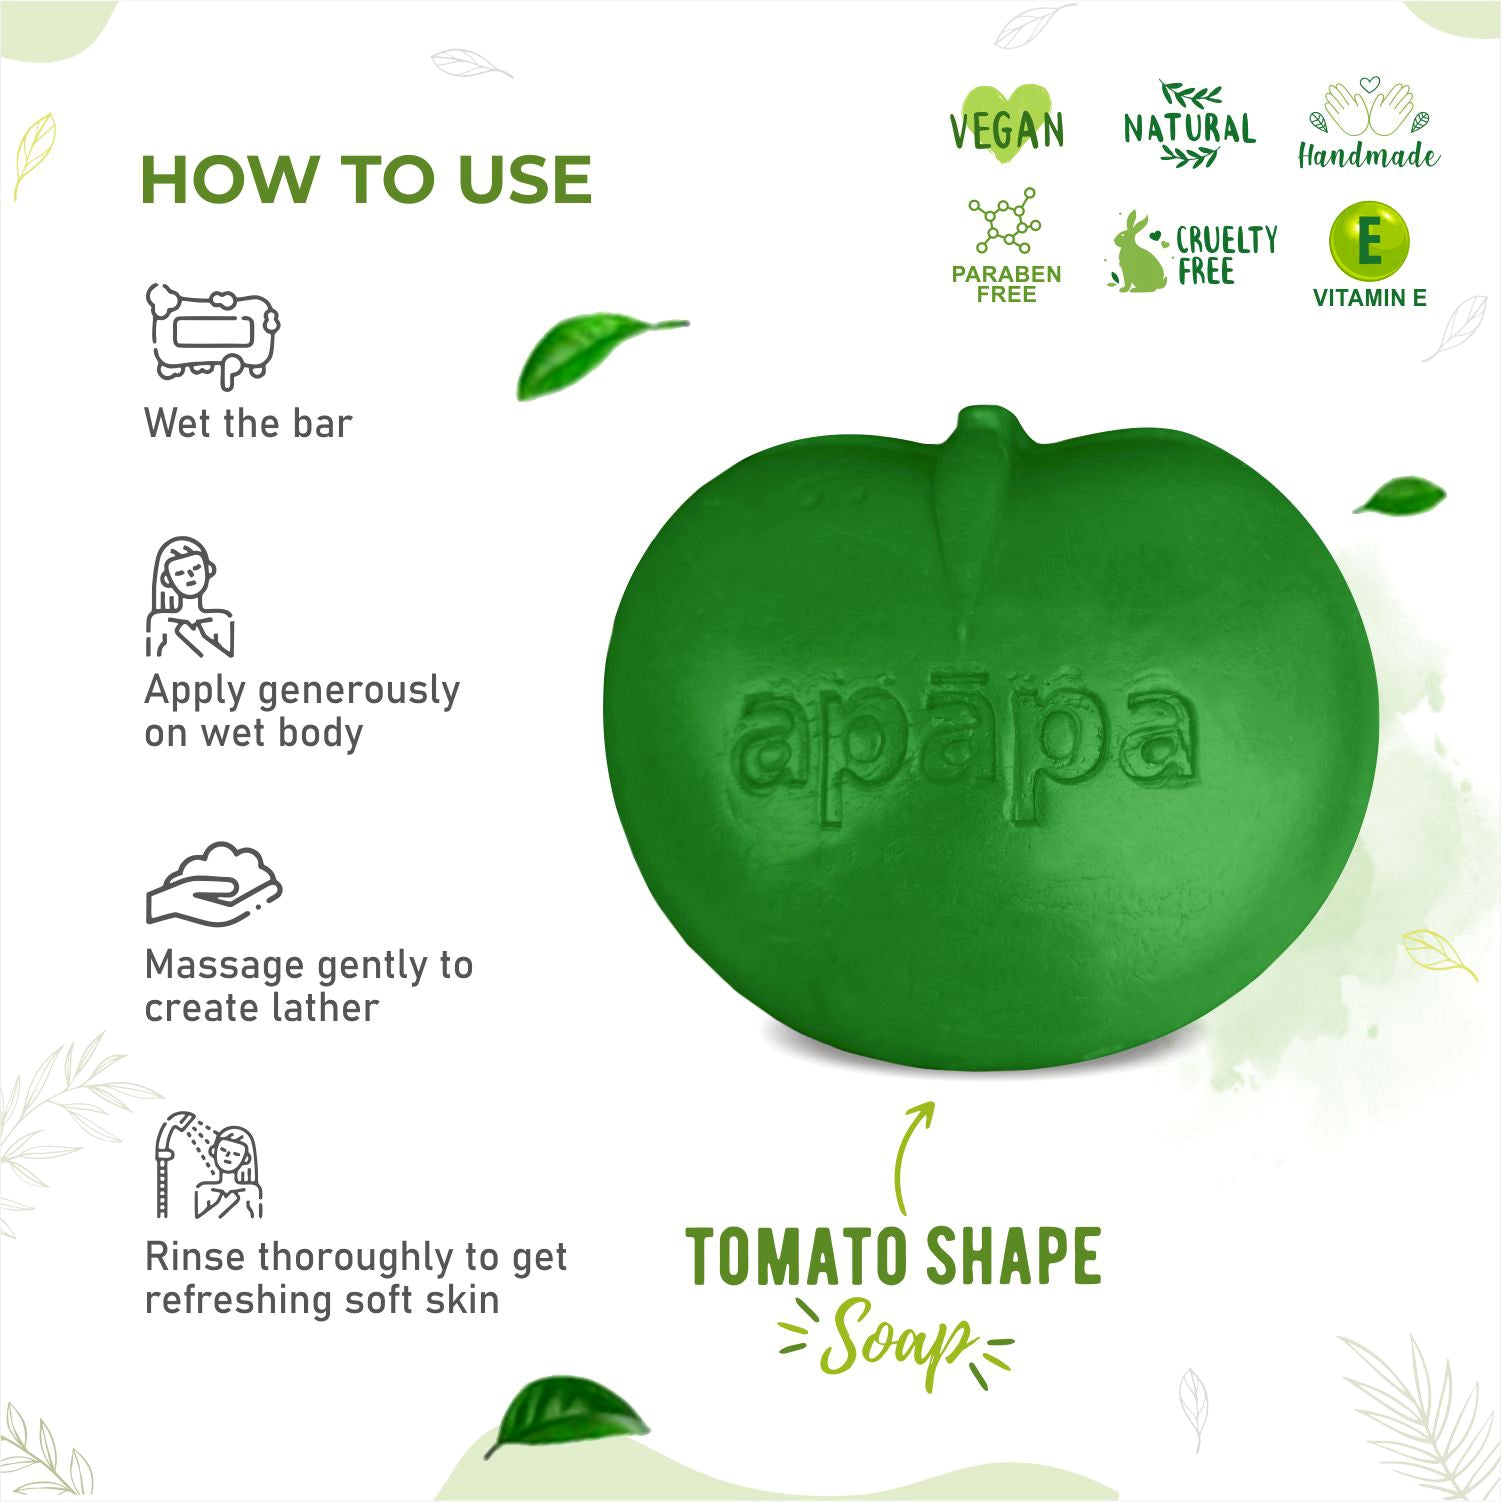 APĀPA Green Tomato Soap